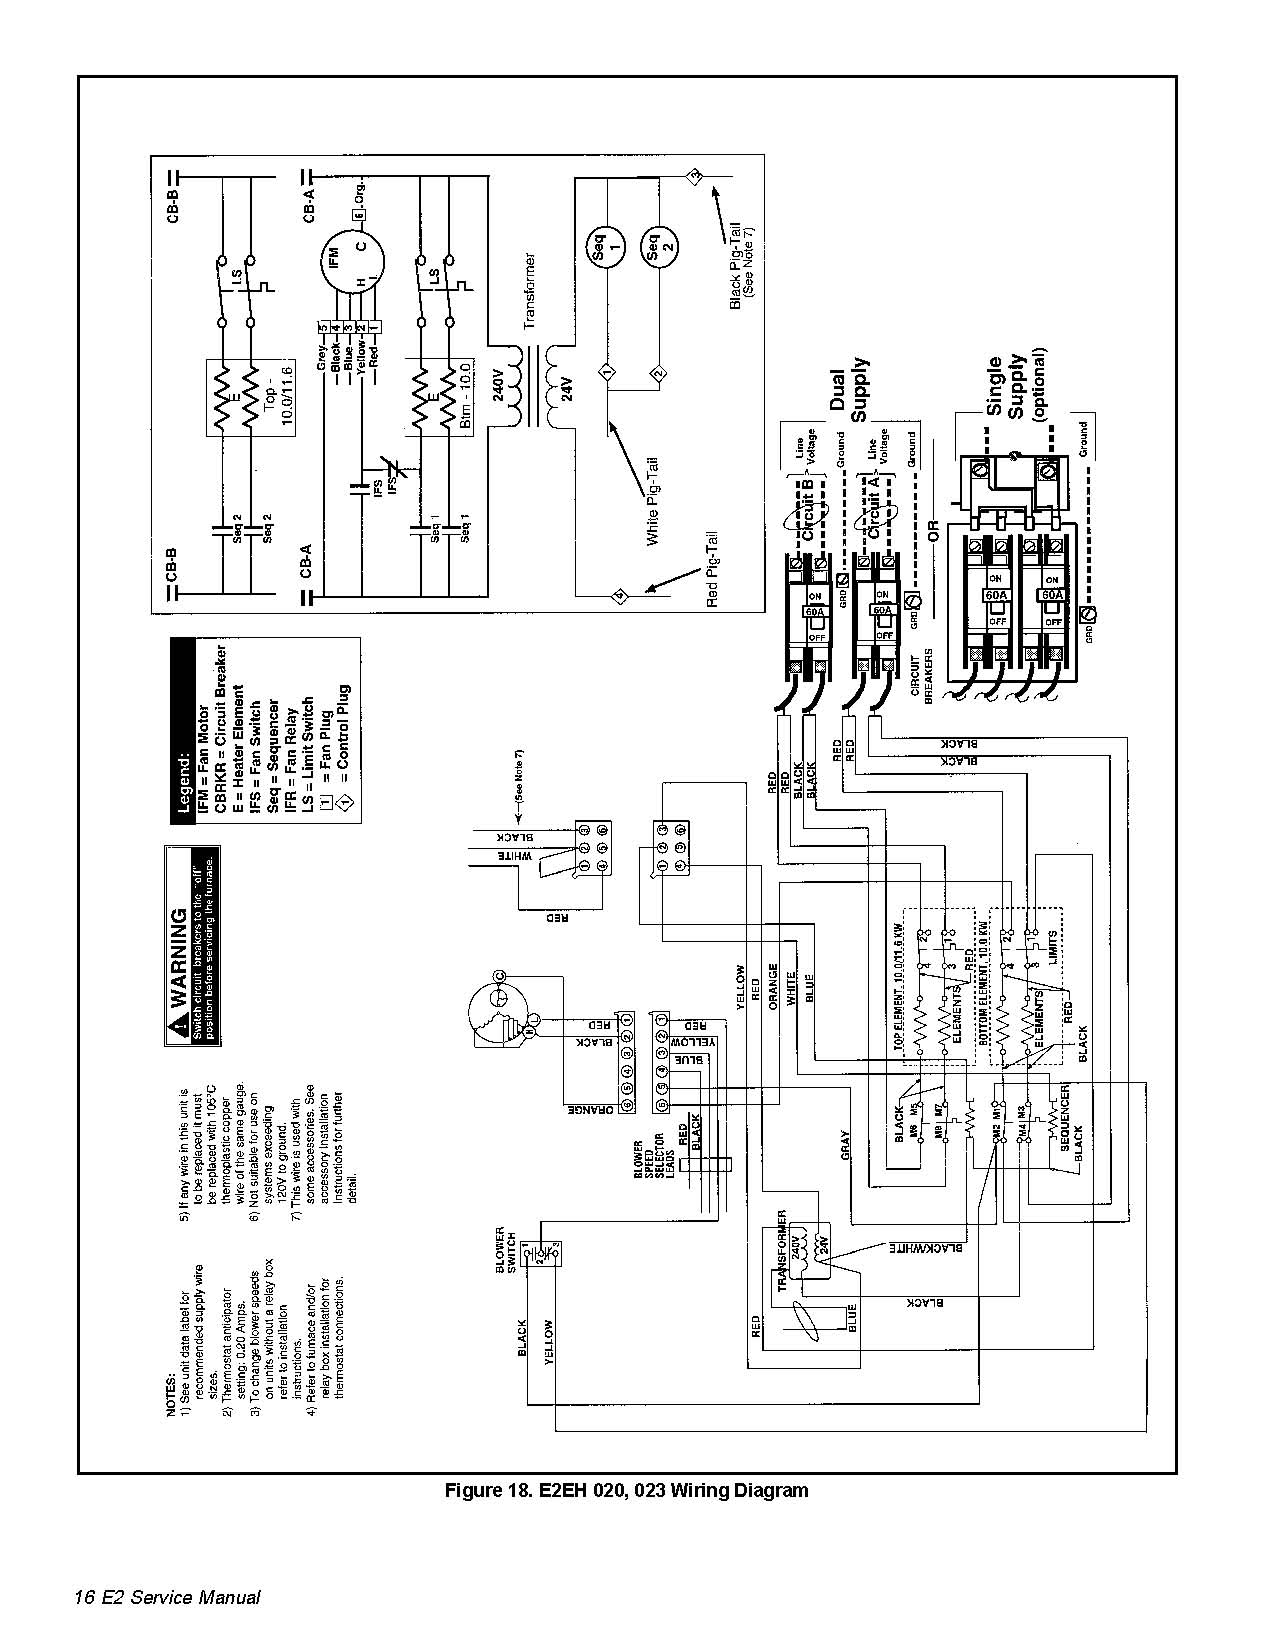 e1eh-015ha wiring diagram